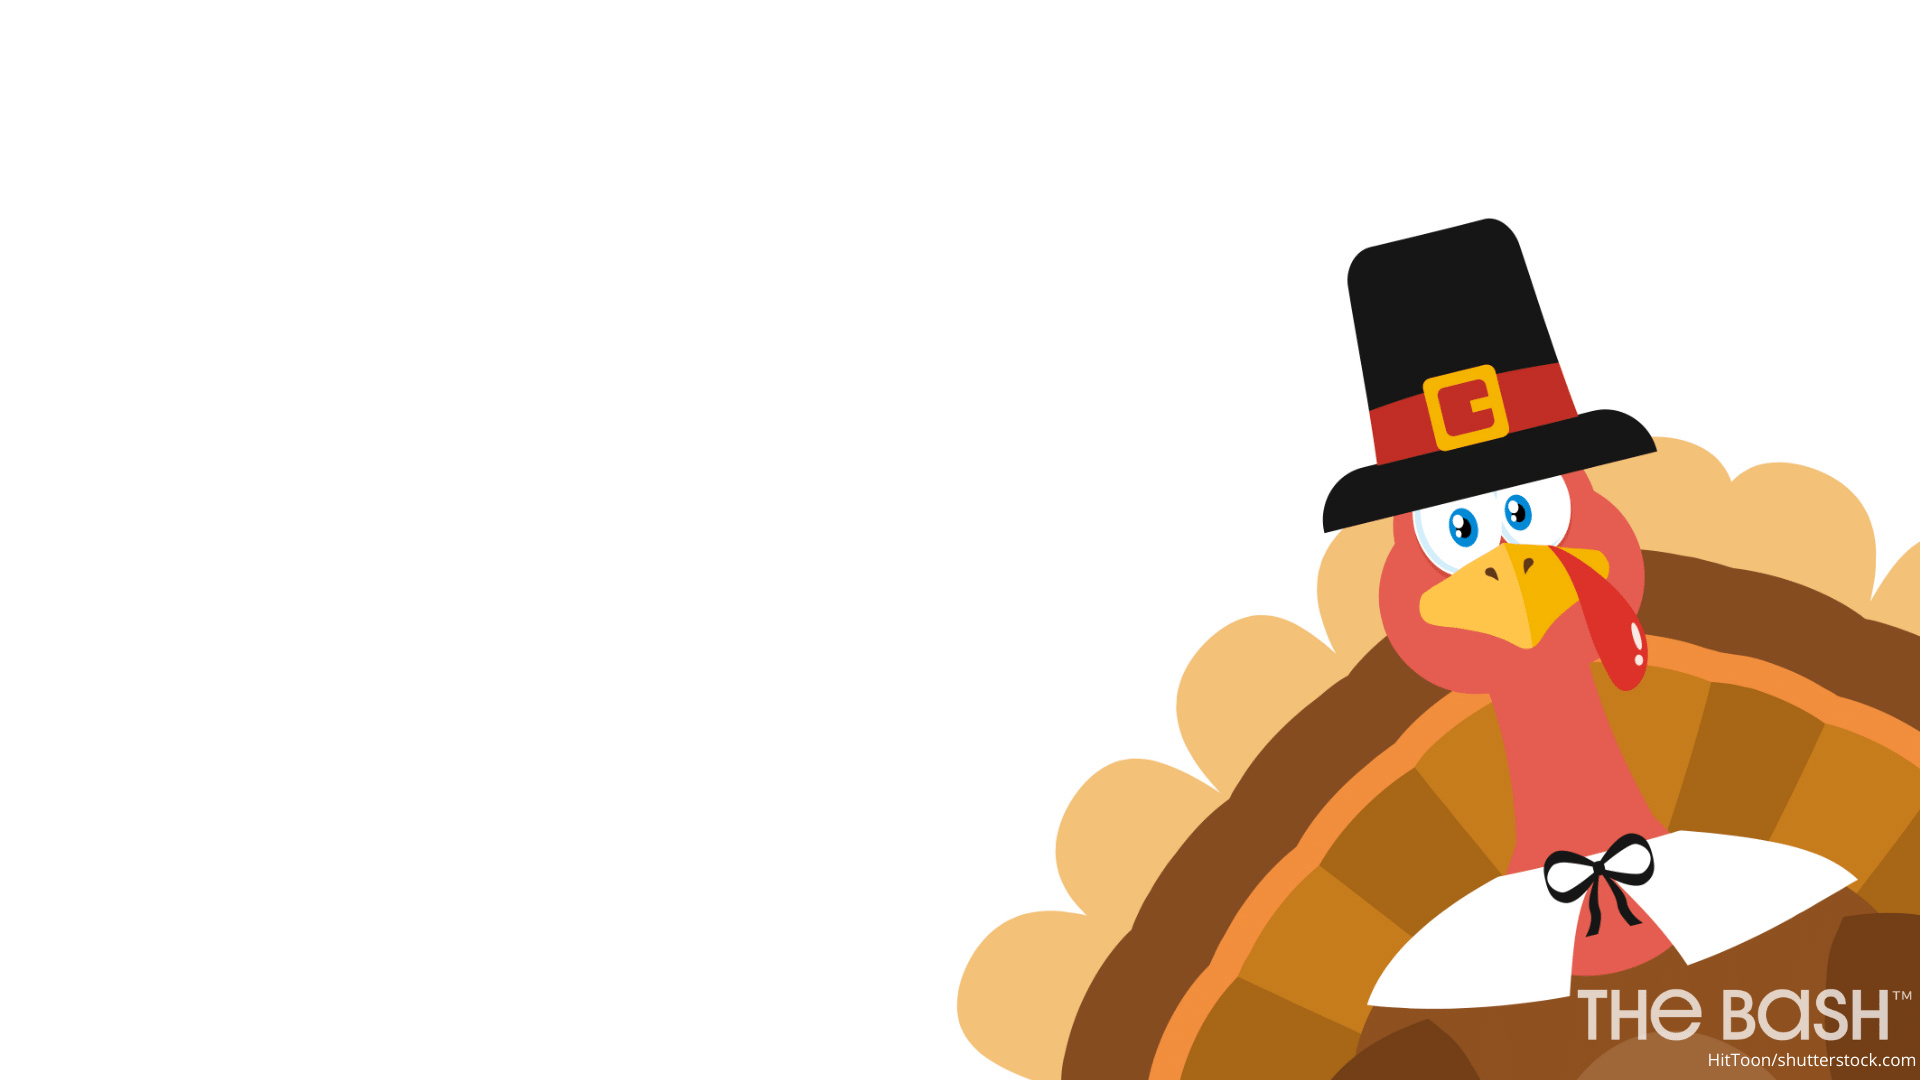 animated thanksgiving wallpaper